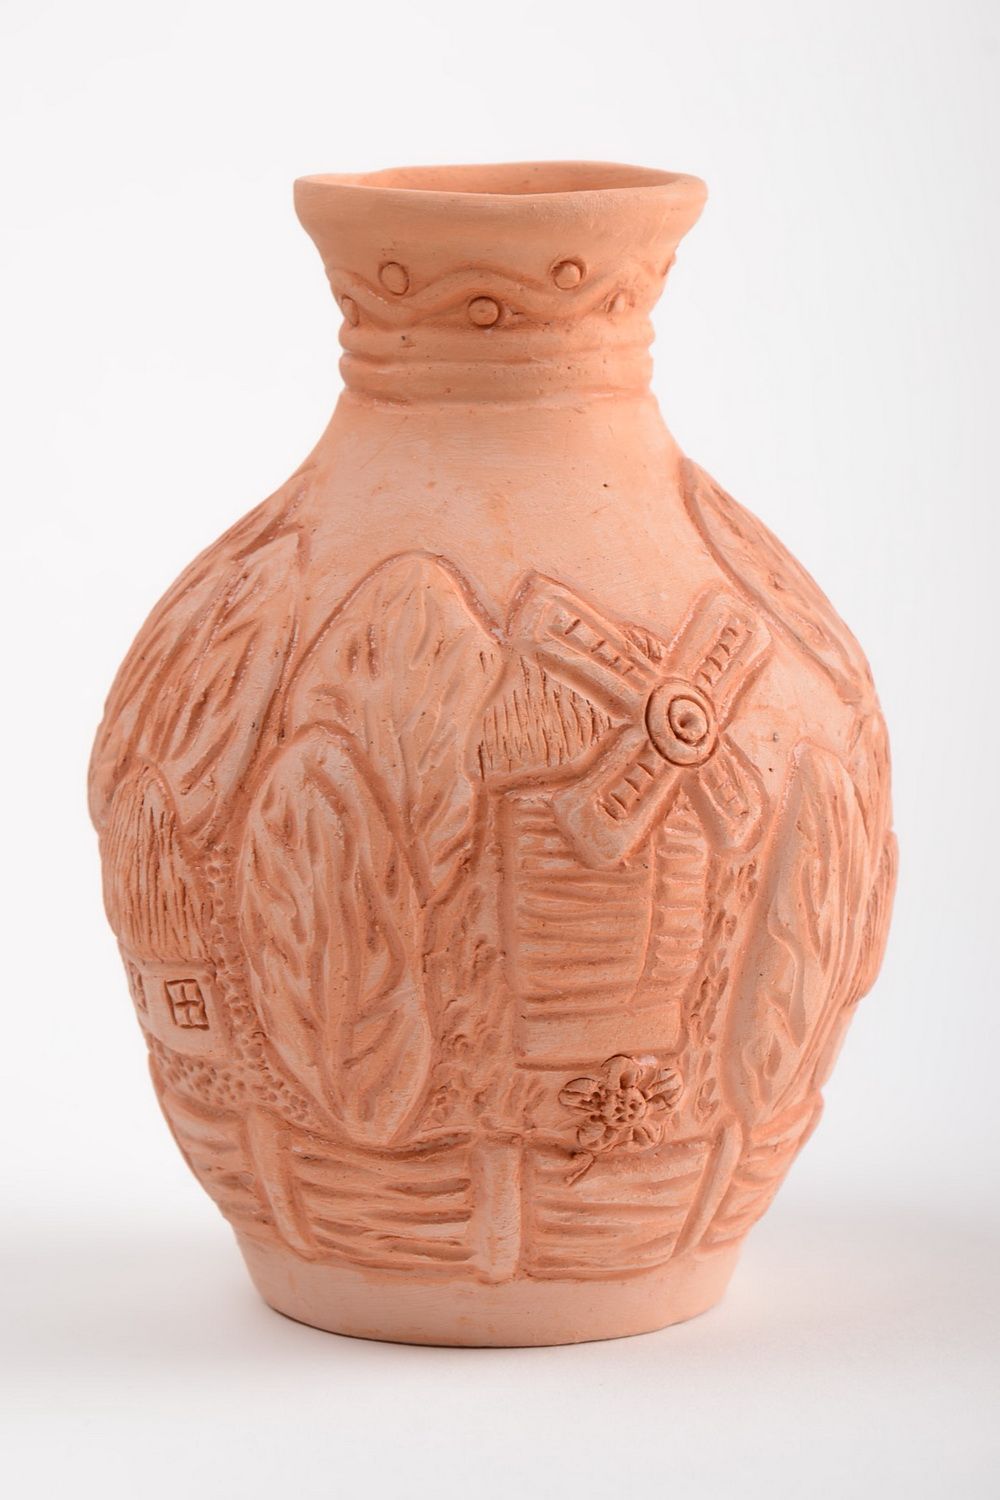 Small clay village style handmade flower vase 5,5, 0,69 lb photo 2